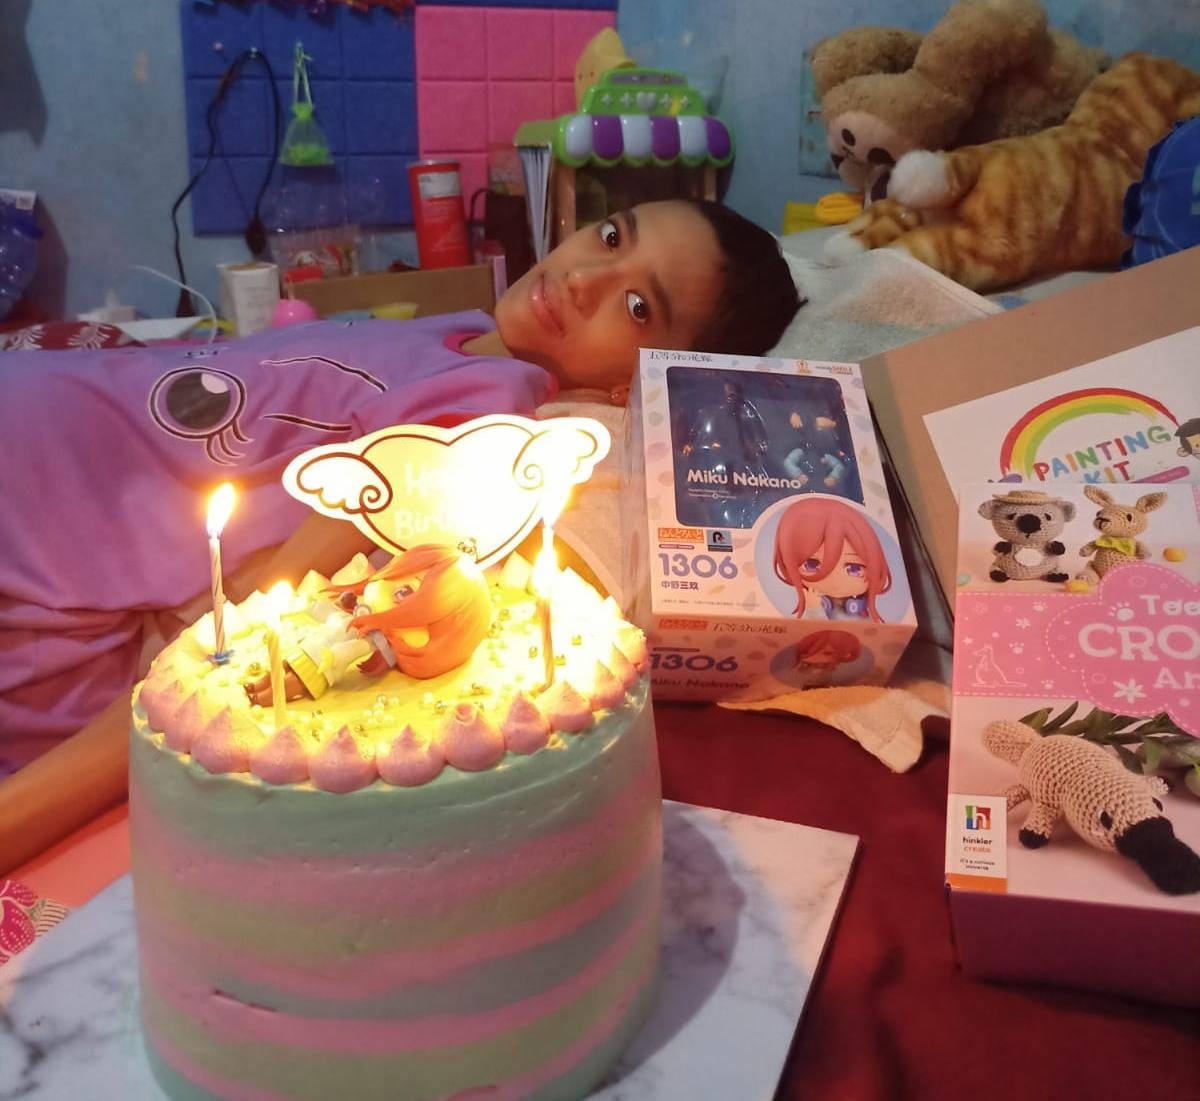 Alesha with her favourite Nakano Miku cake